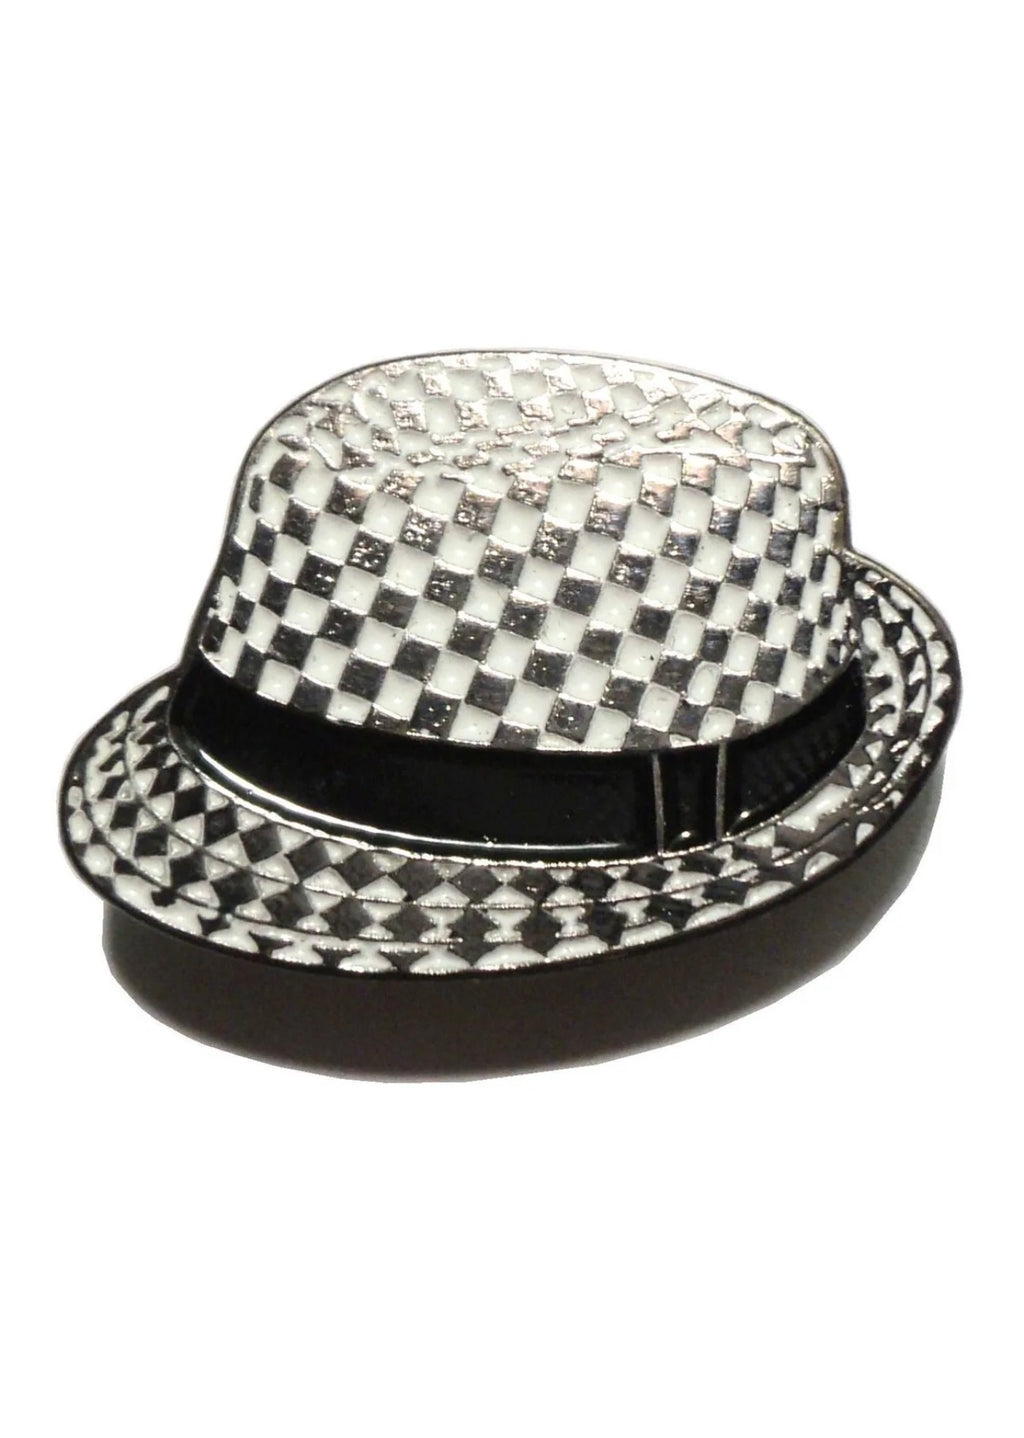 Two Tone Pork Pie Hat Chequerboard Ska Mods Pin Badge Black/Whiten. - Raw Menswear